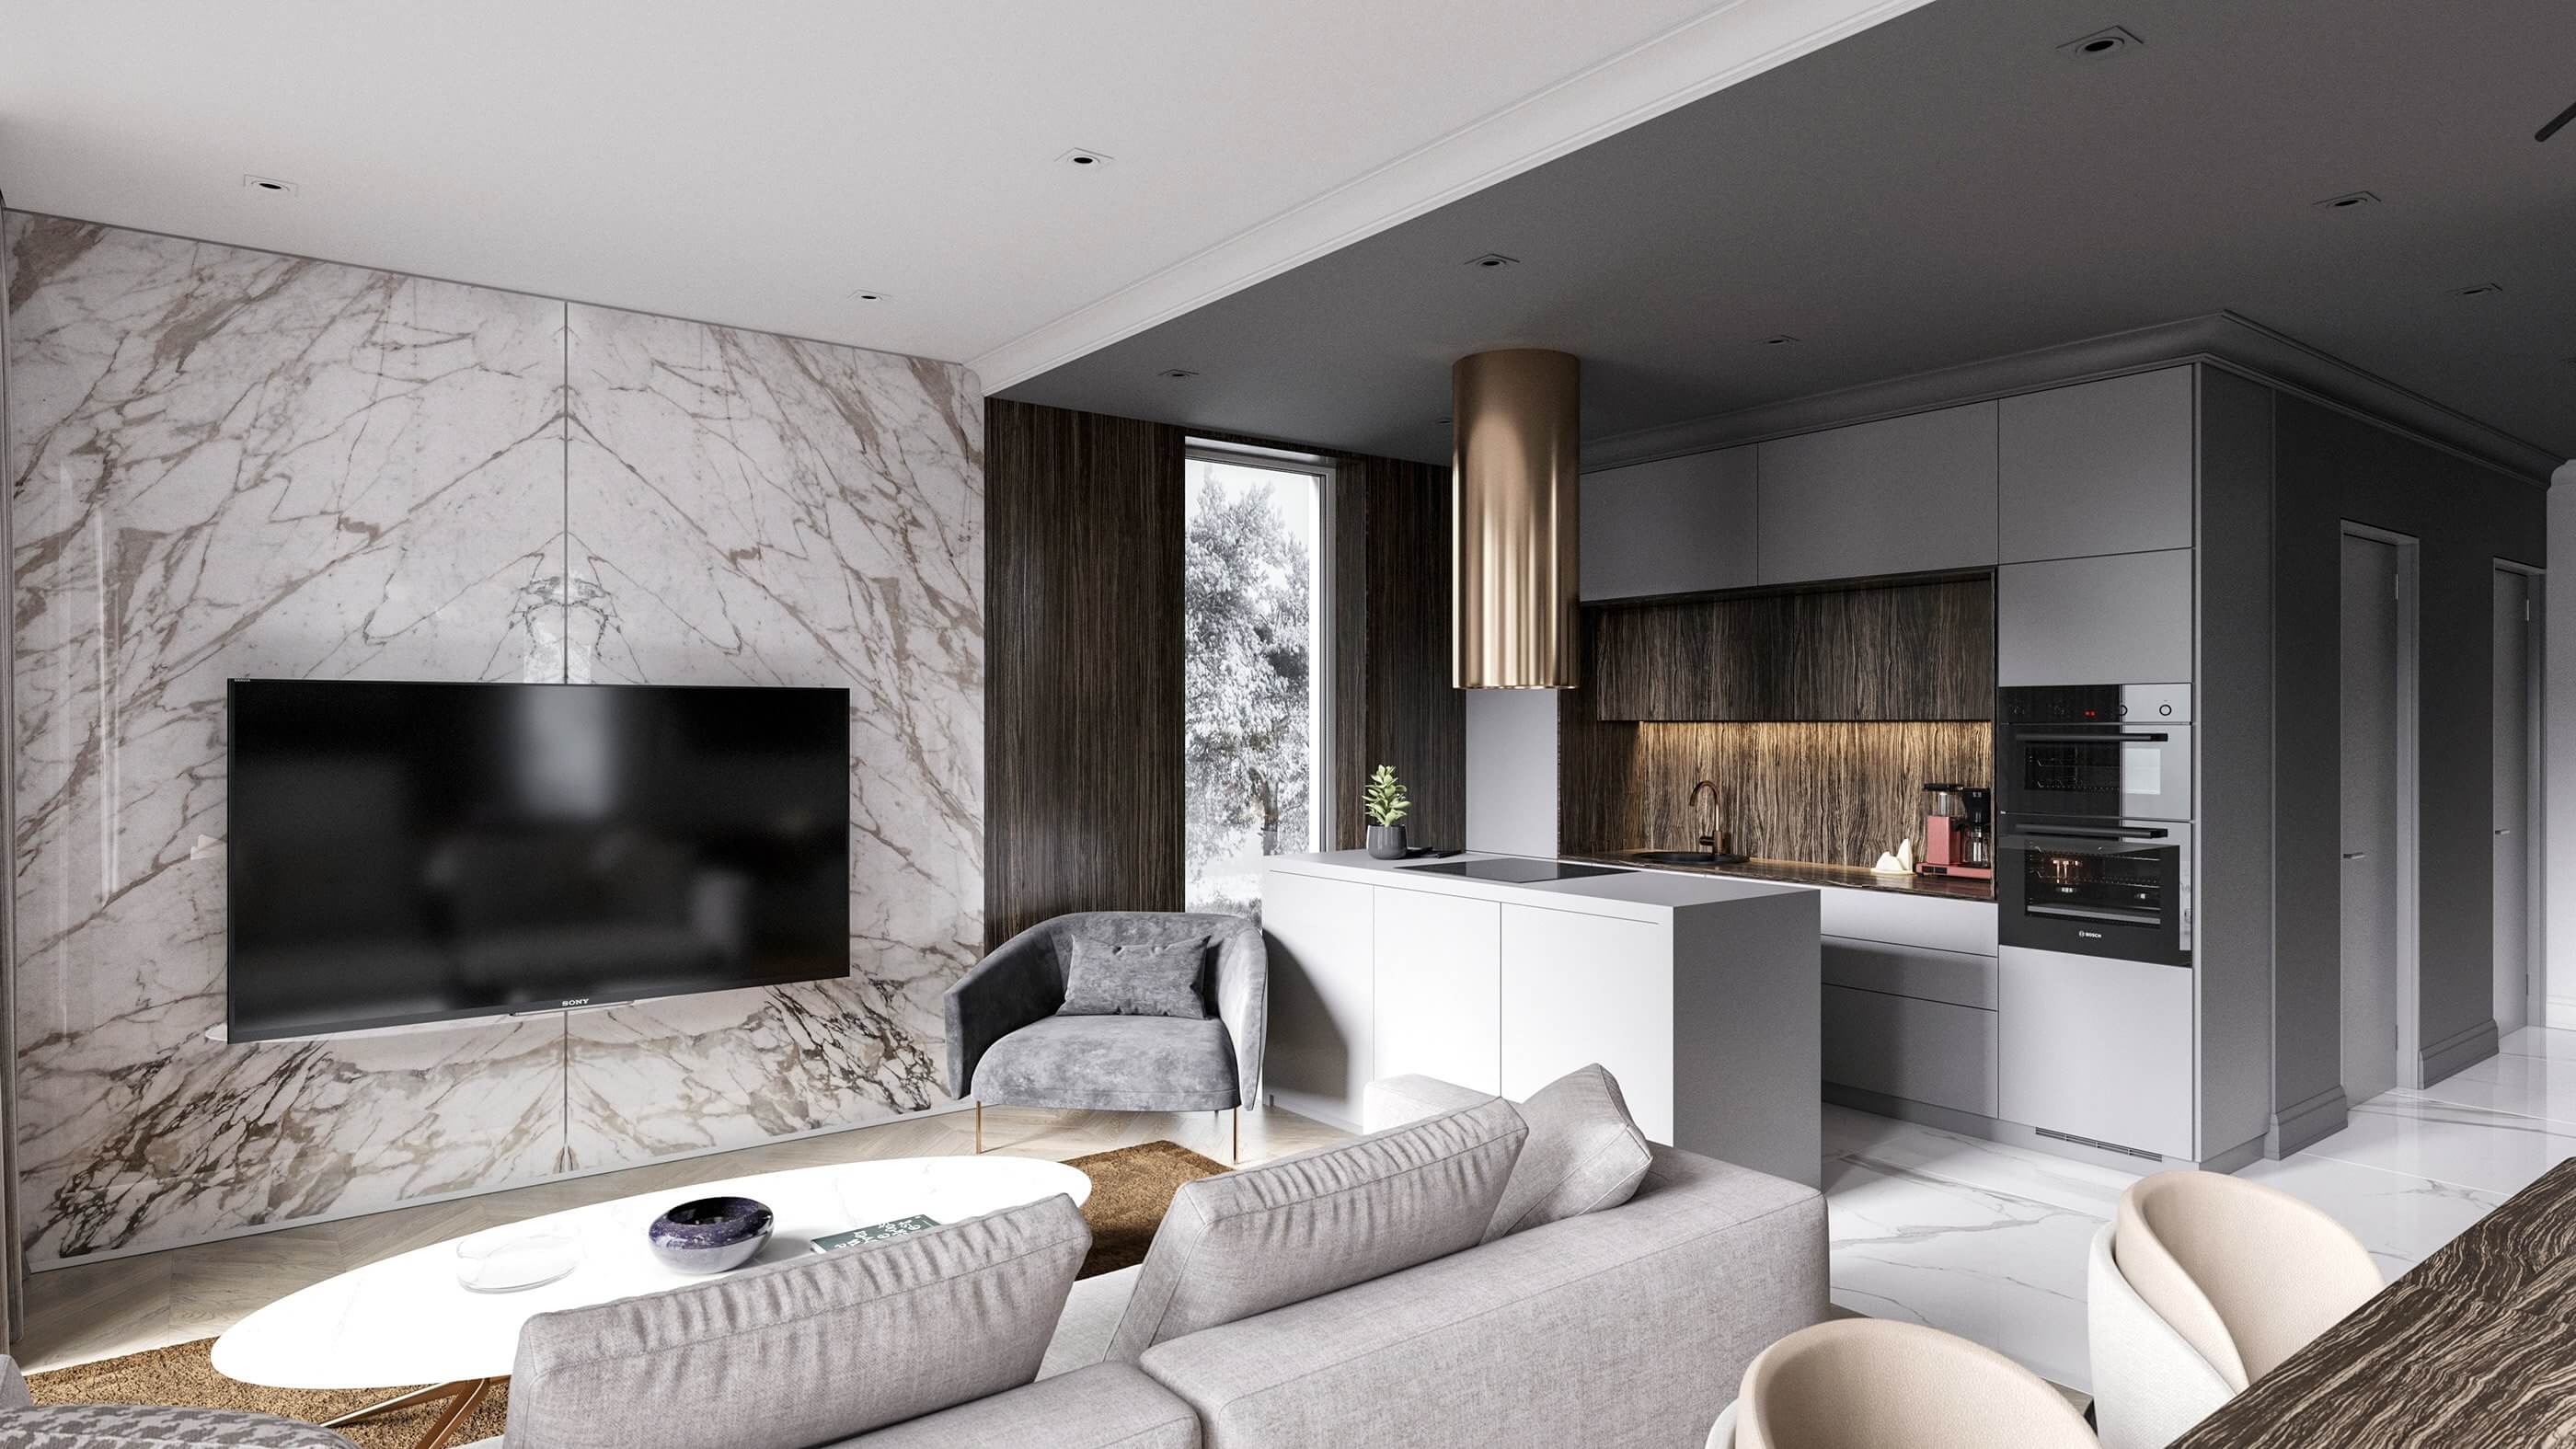 Stylish interior concept design kitchen and living room - cgi visualization